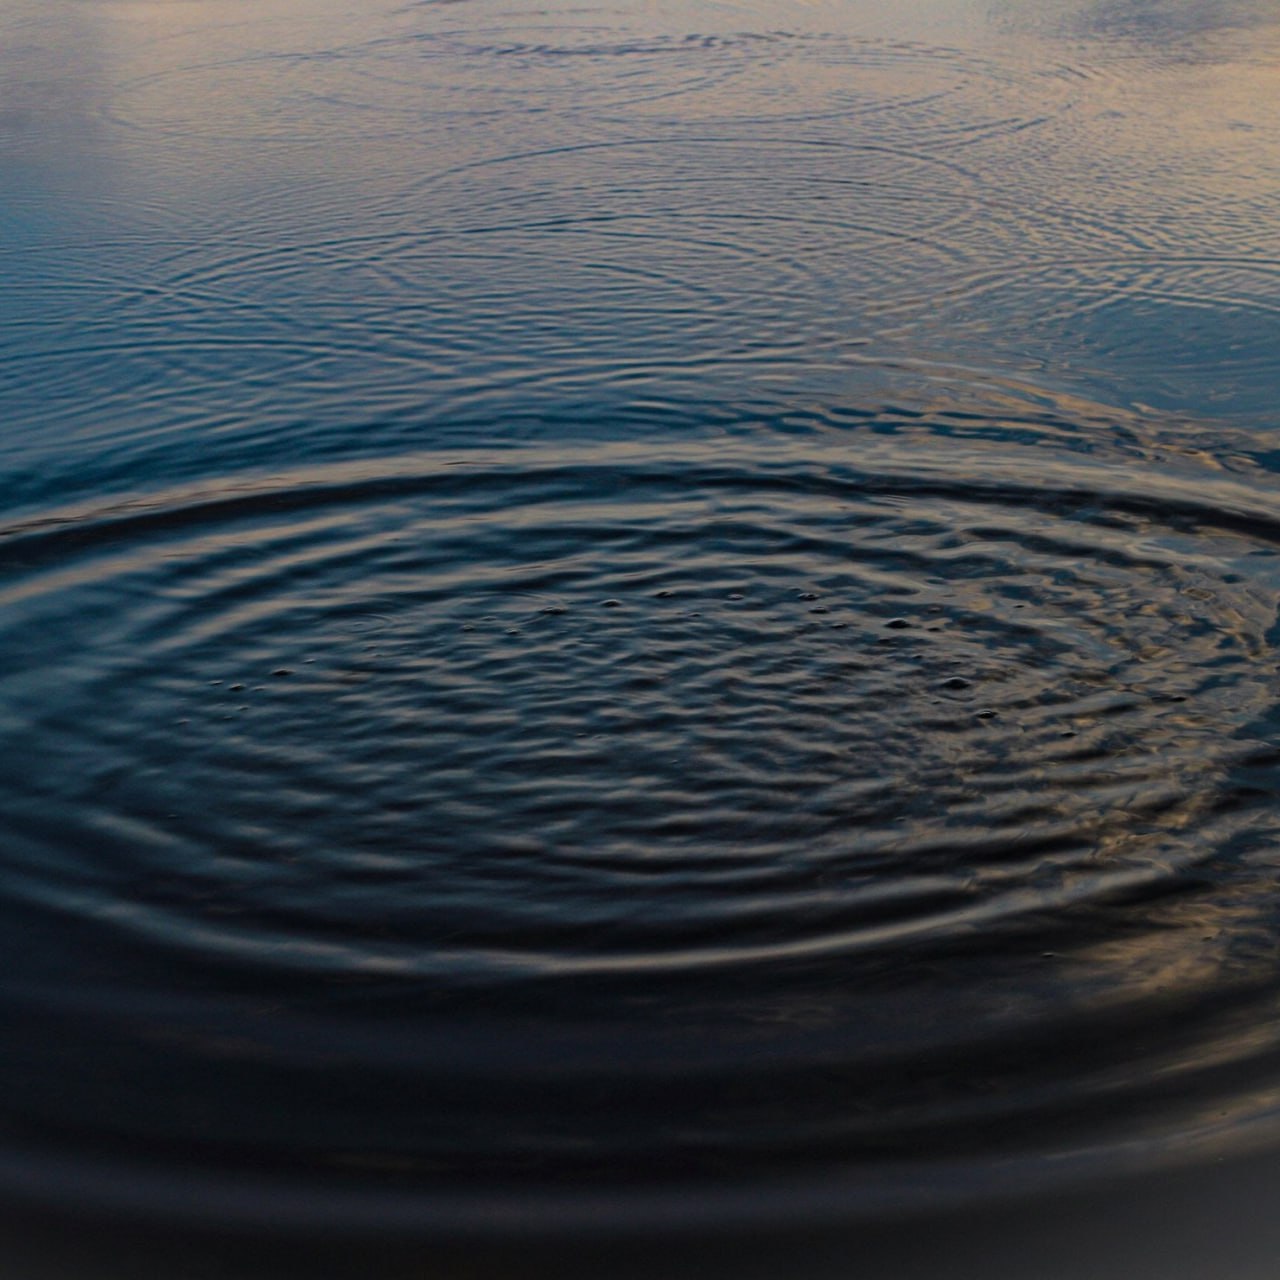 Круги н воде. Круги на воде. Концентрические круги на воде. Эффект круги на воде. Круги на воде иллюстрация.